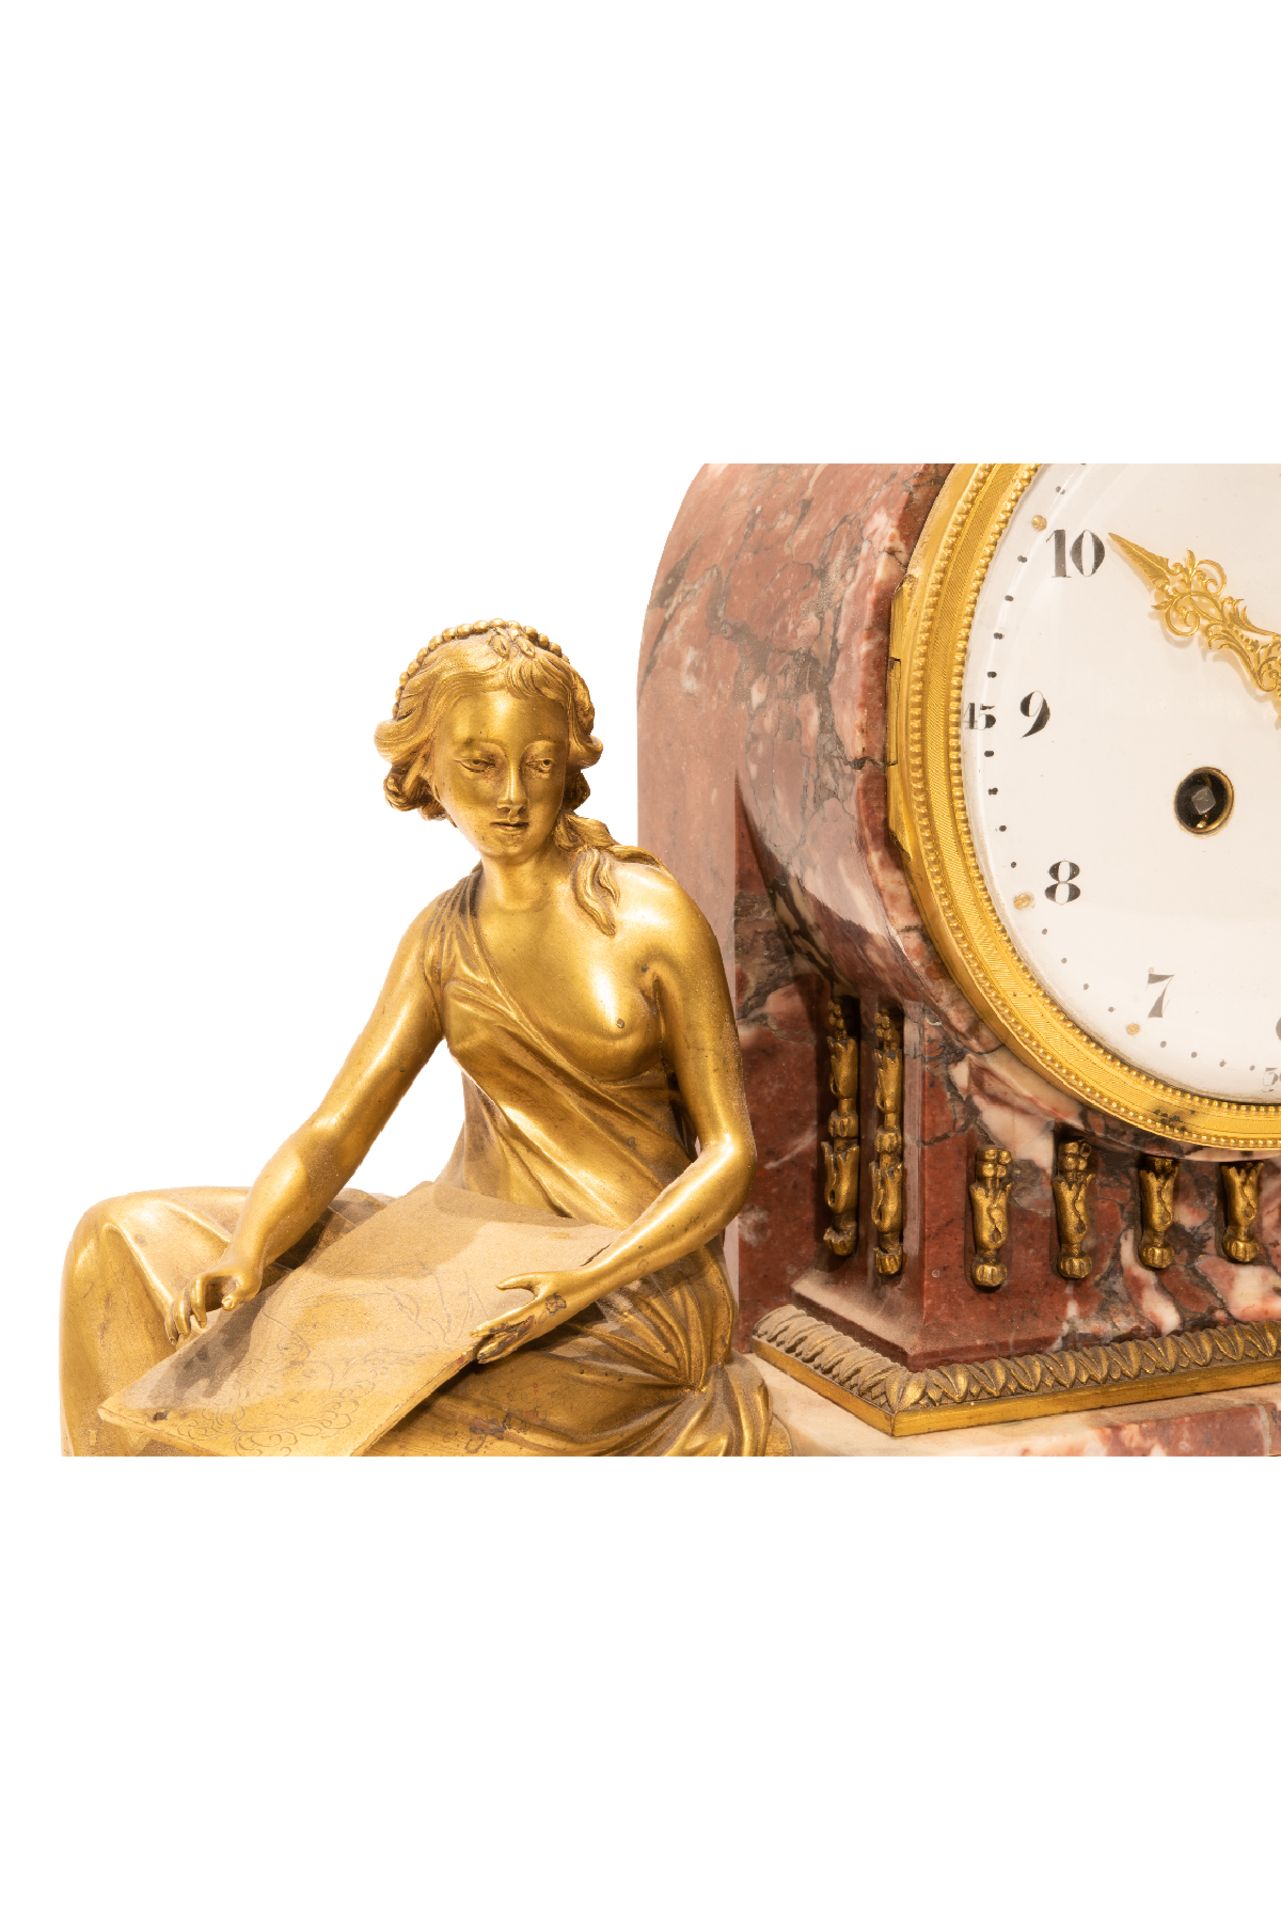 Franz Morawetz 1872-1924, Mantel clock - Image 4 of 7